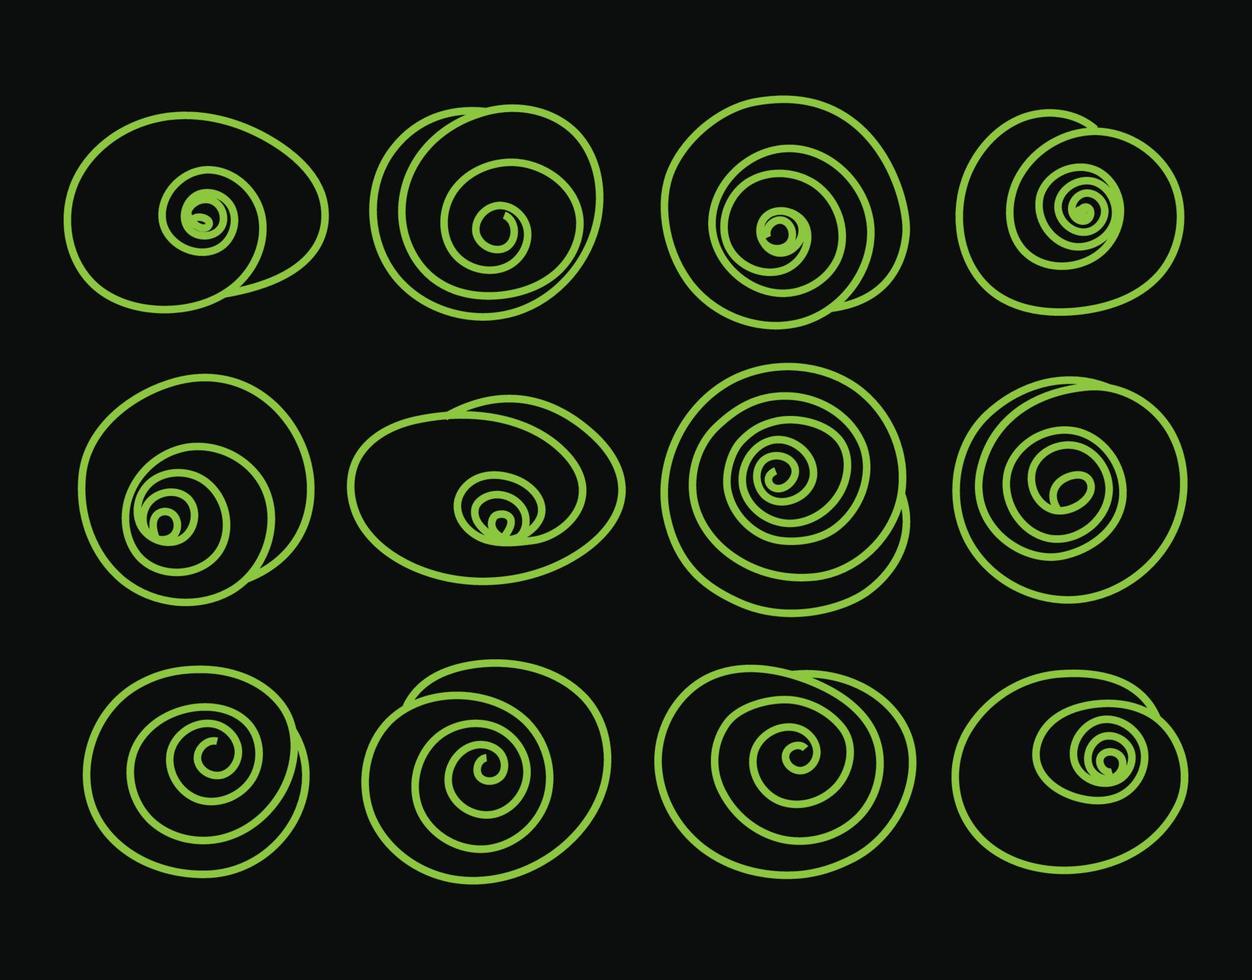 Spiral round abstract shape art decoration flat design vector illustration